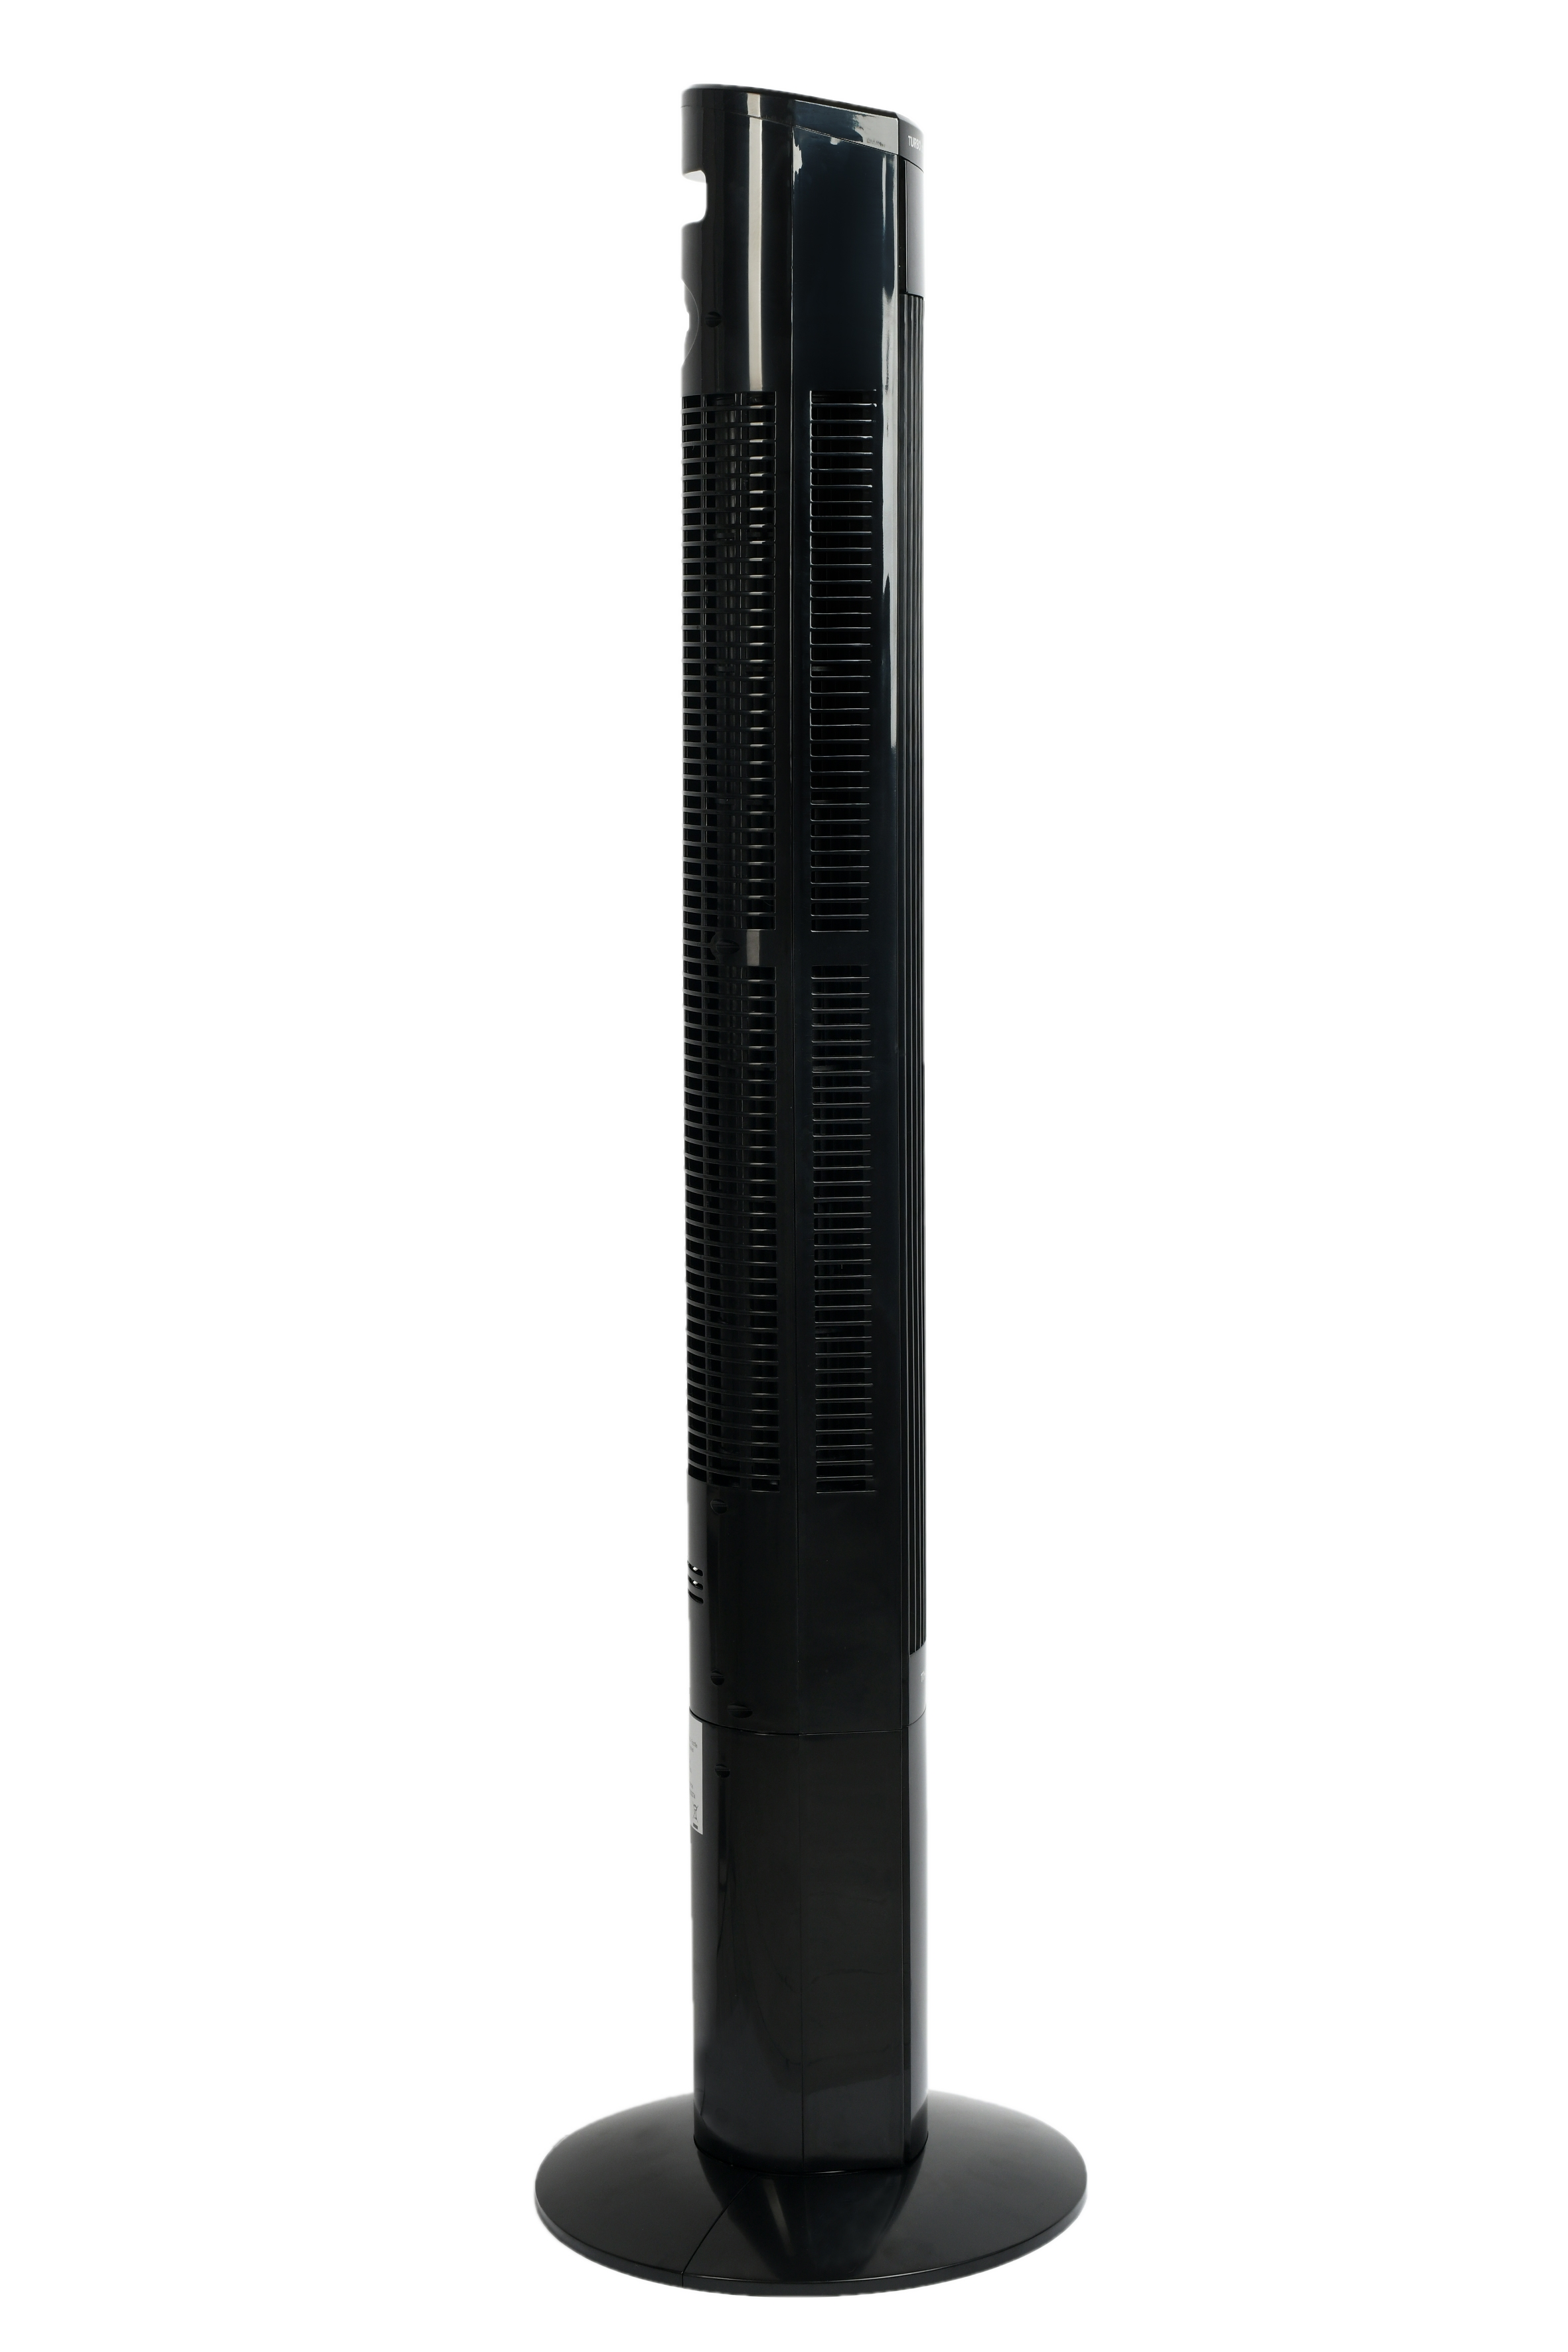 THOMSON THVEL500T Turmventilator Watt) (45 schwarz